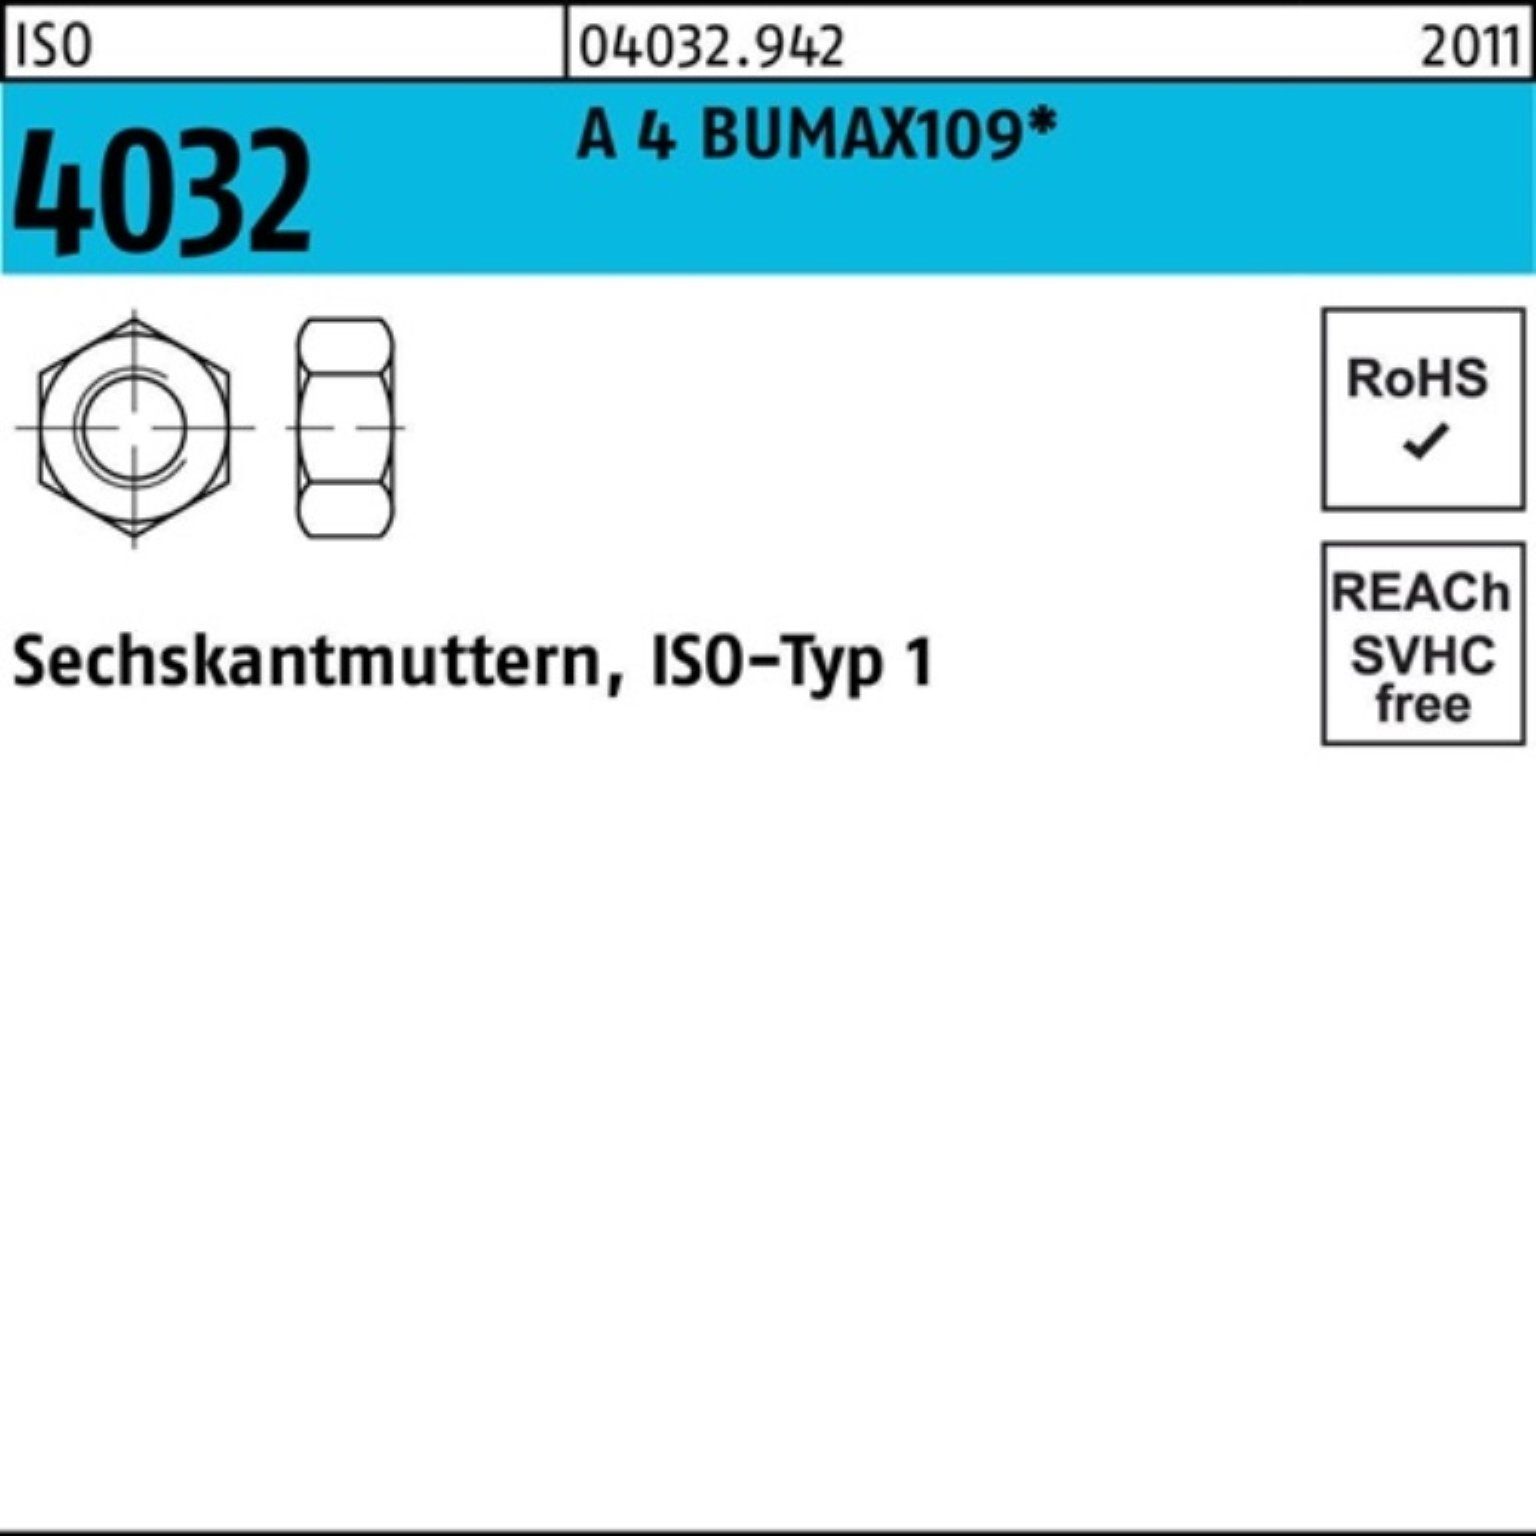 Bufab Muttern 100er Pack Sechskantmutter ISO 4032 M10 A 4 BUMAX109 50 Stück BUFAB I